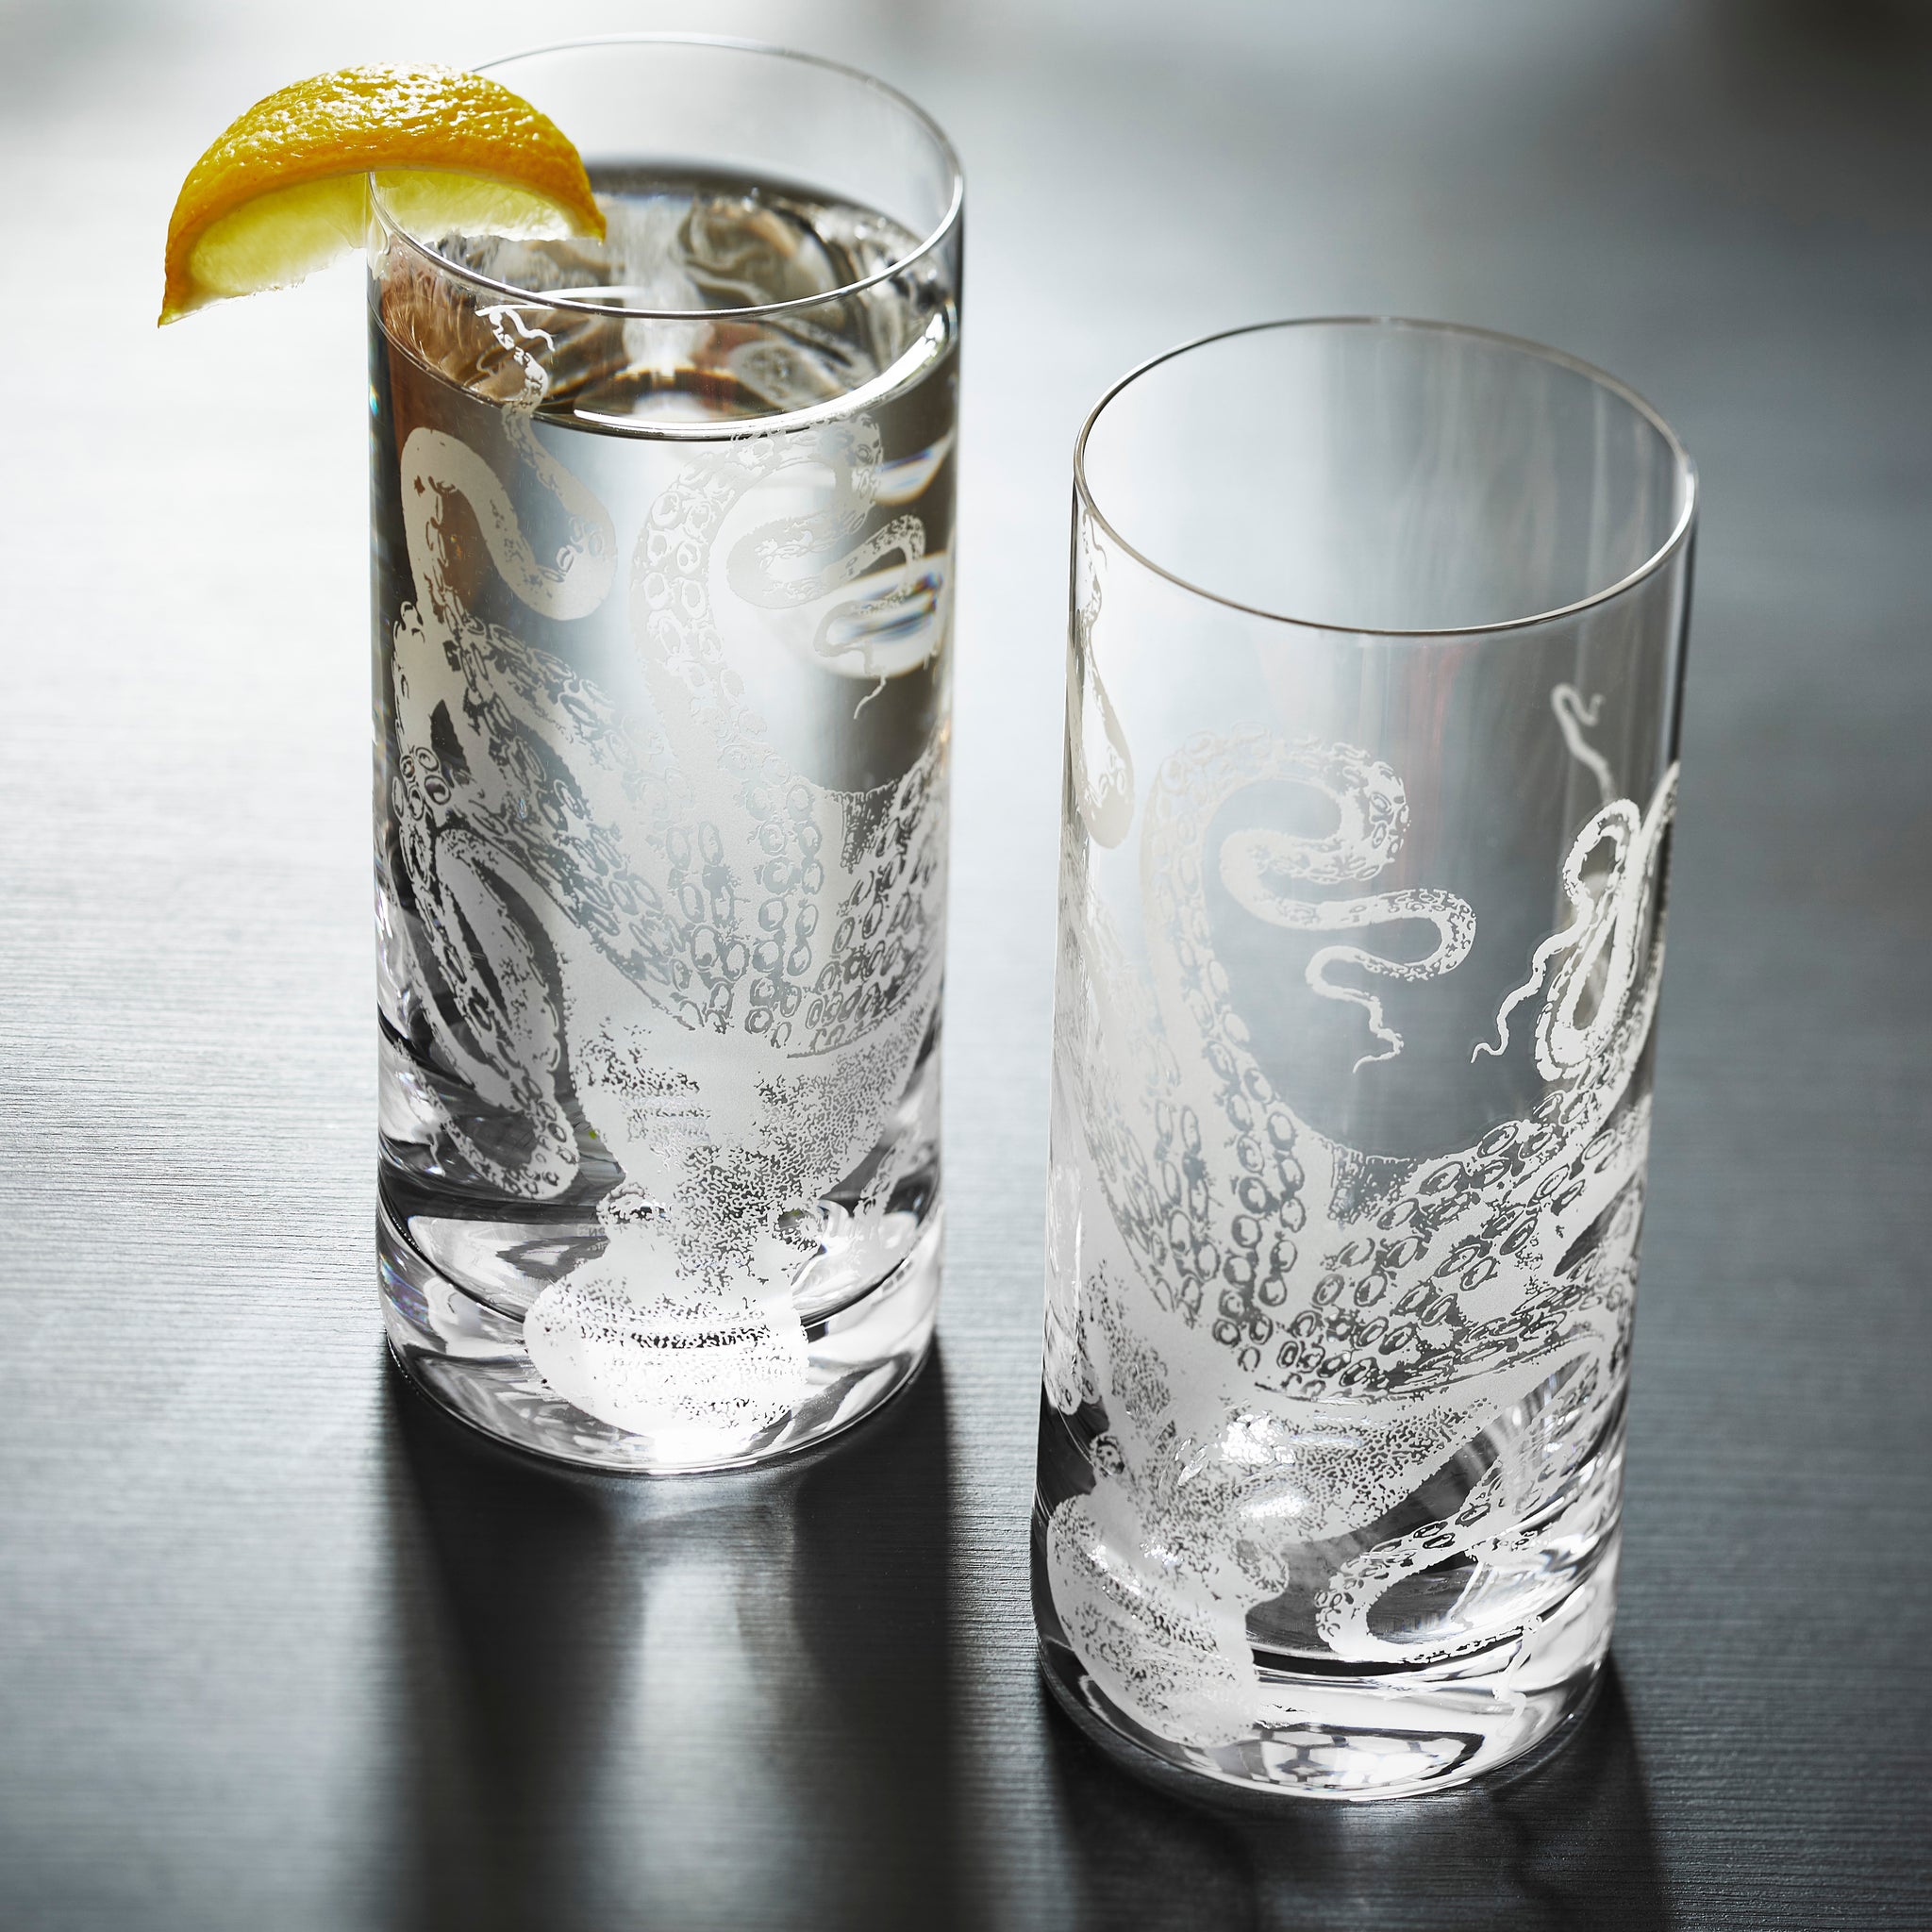 Crystal Highball Drinkware Glass Set Tall Drinking Glasses 12